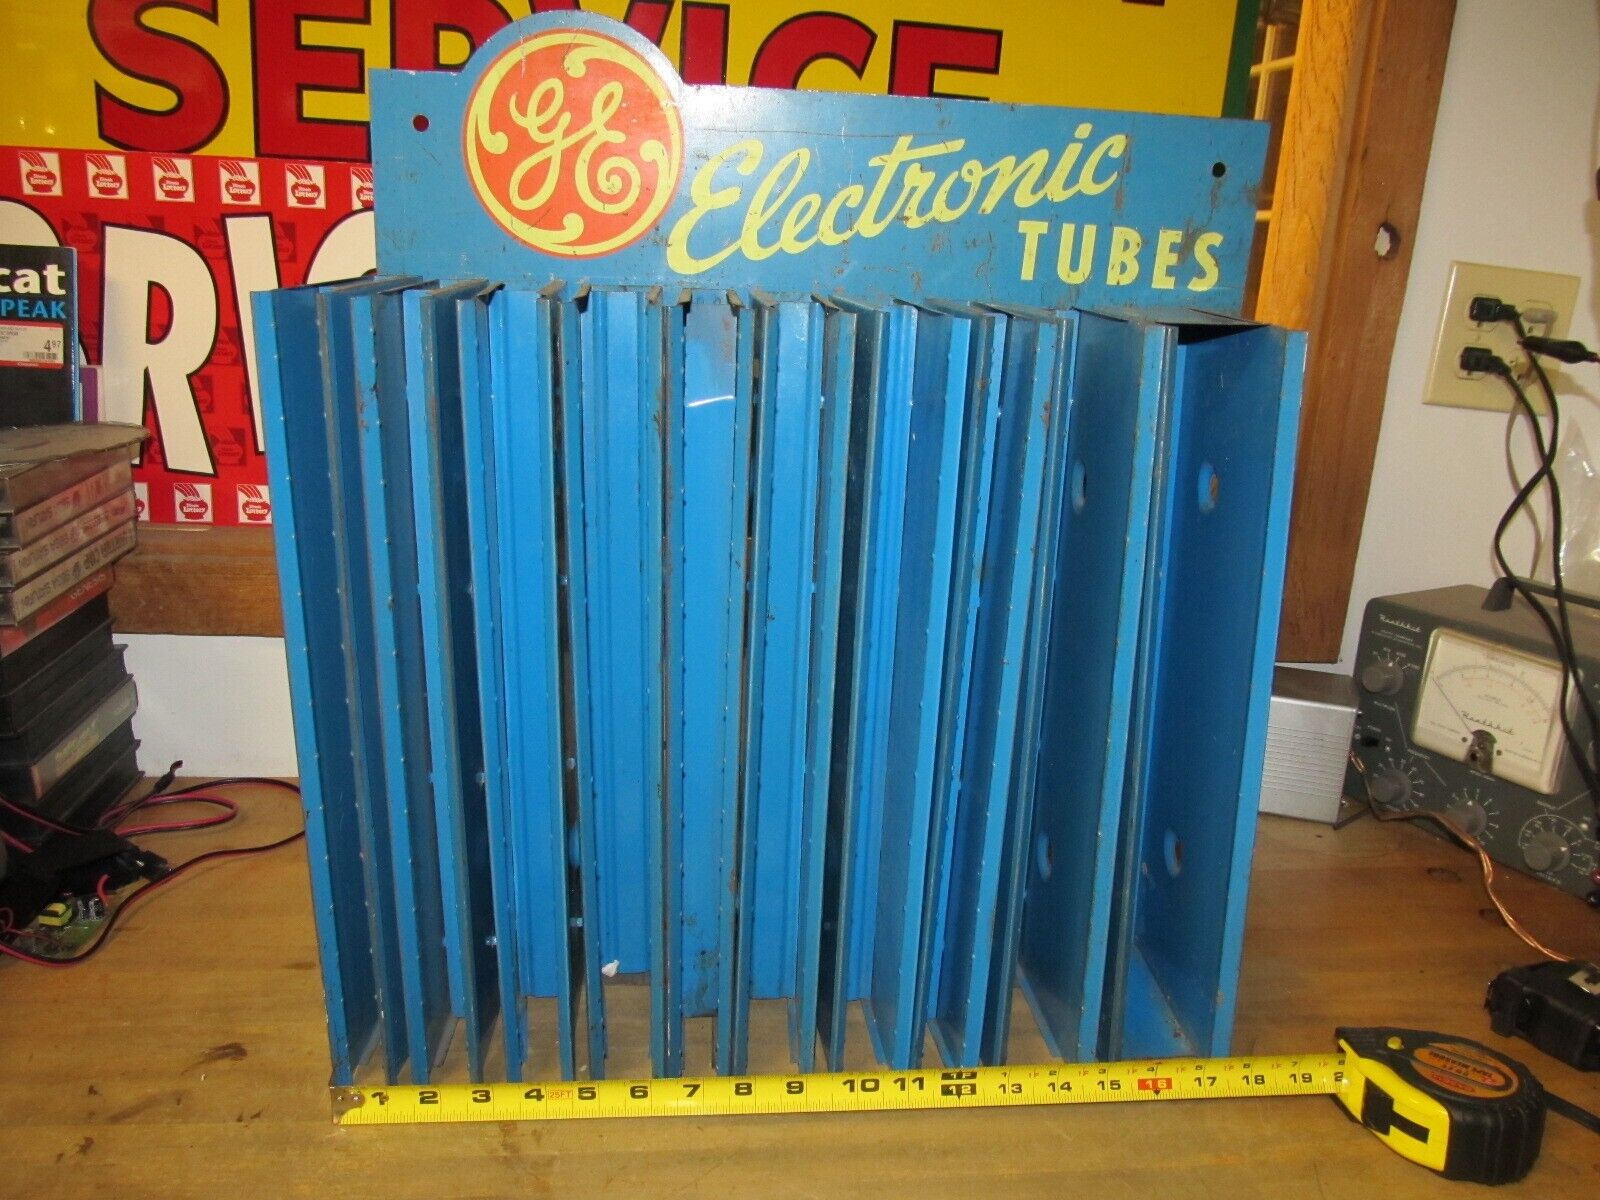 Vintage General Electric  GE ELECTRONIC TUBES Advertising Display Sign Rack